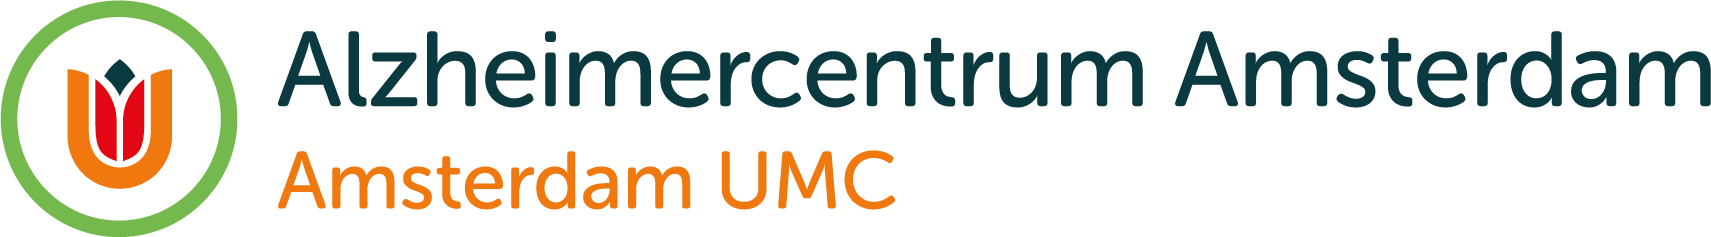 Alzheimercentrum Amsterdam Logo